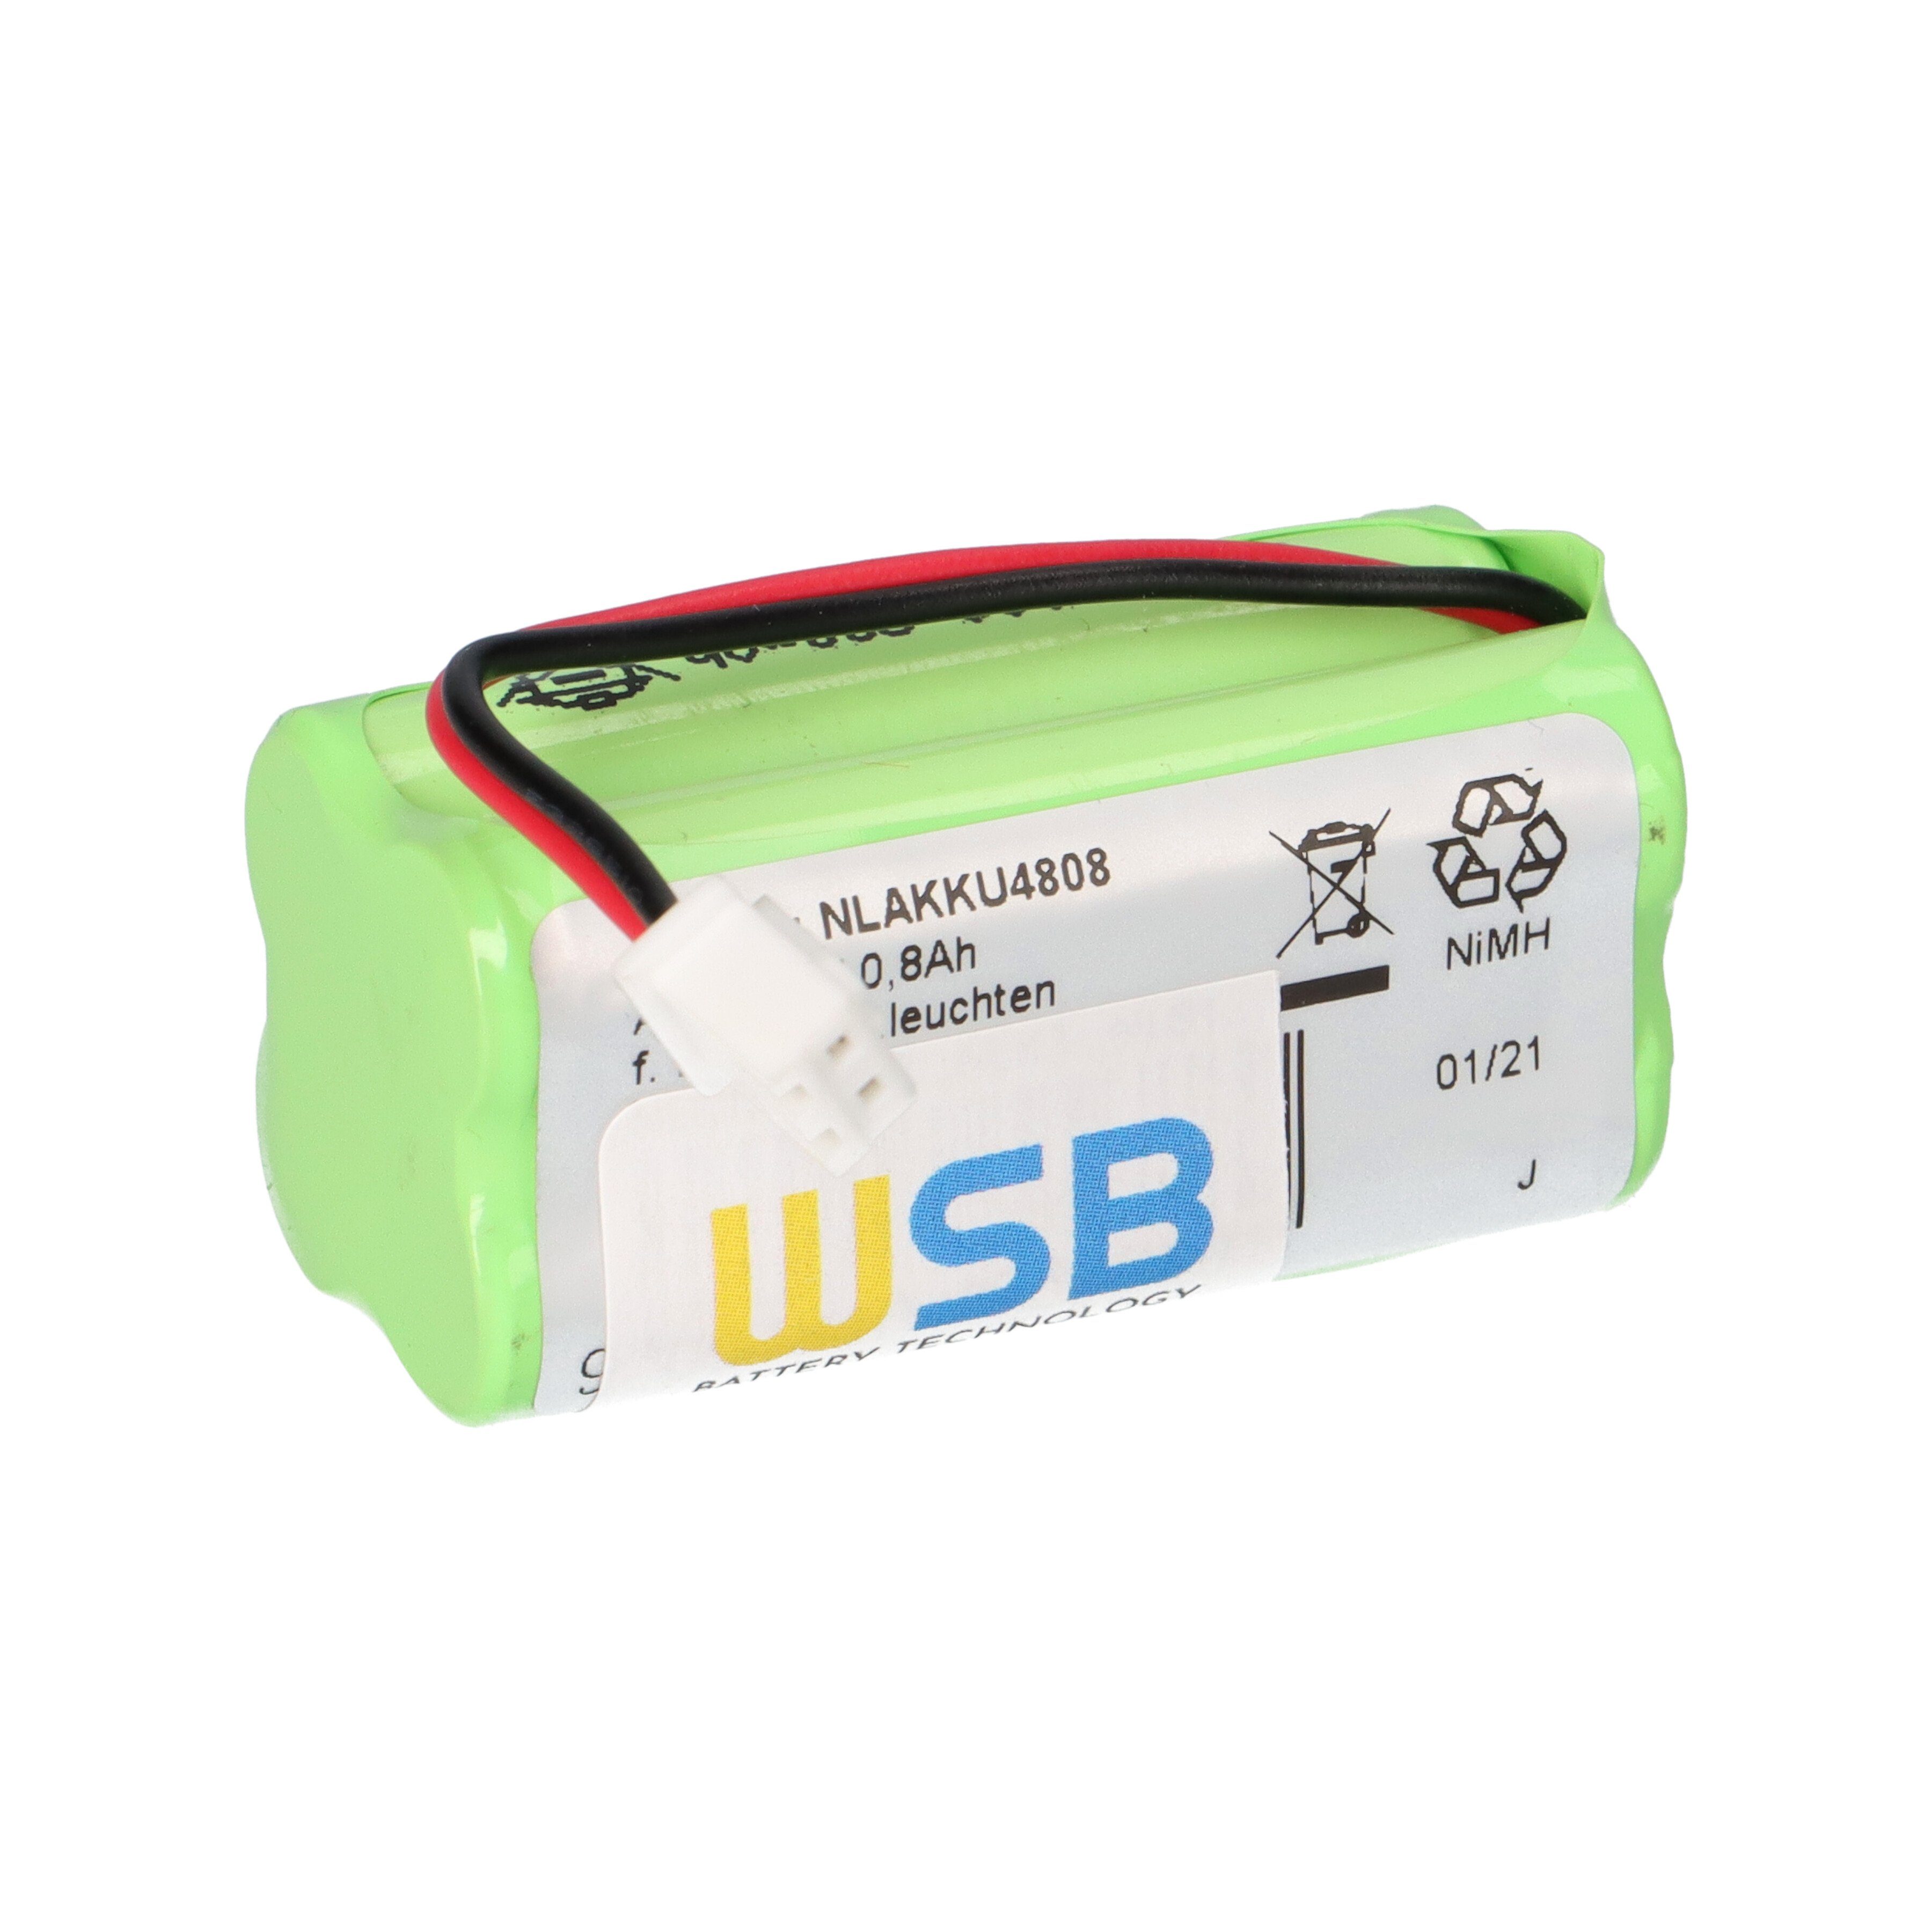 Abstand WSB Battery Technlology GmbH Akkupack AW-0480-0080AAA-NM01 kompatibel Akku Fischer 4,8V